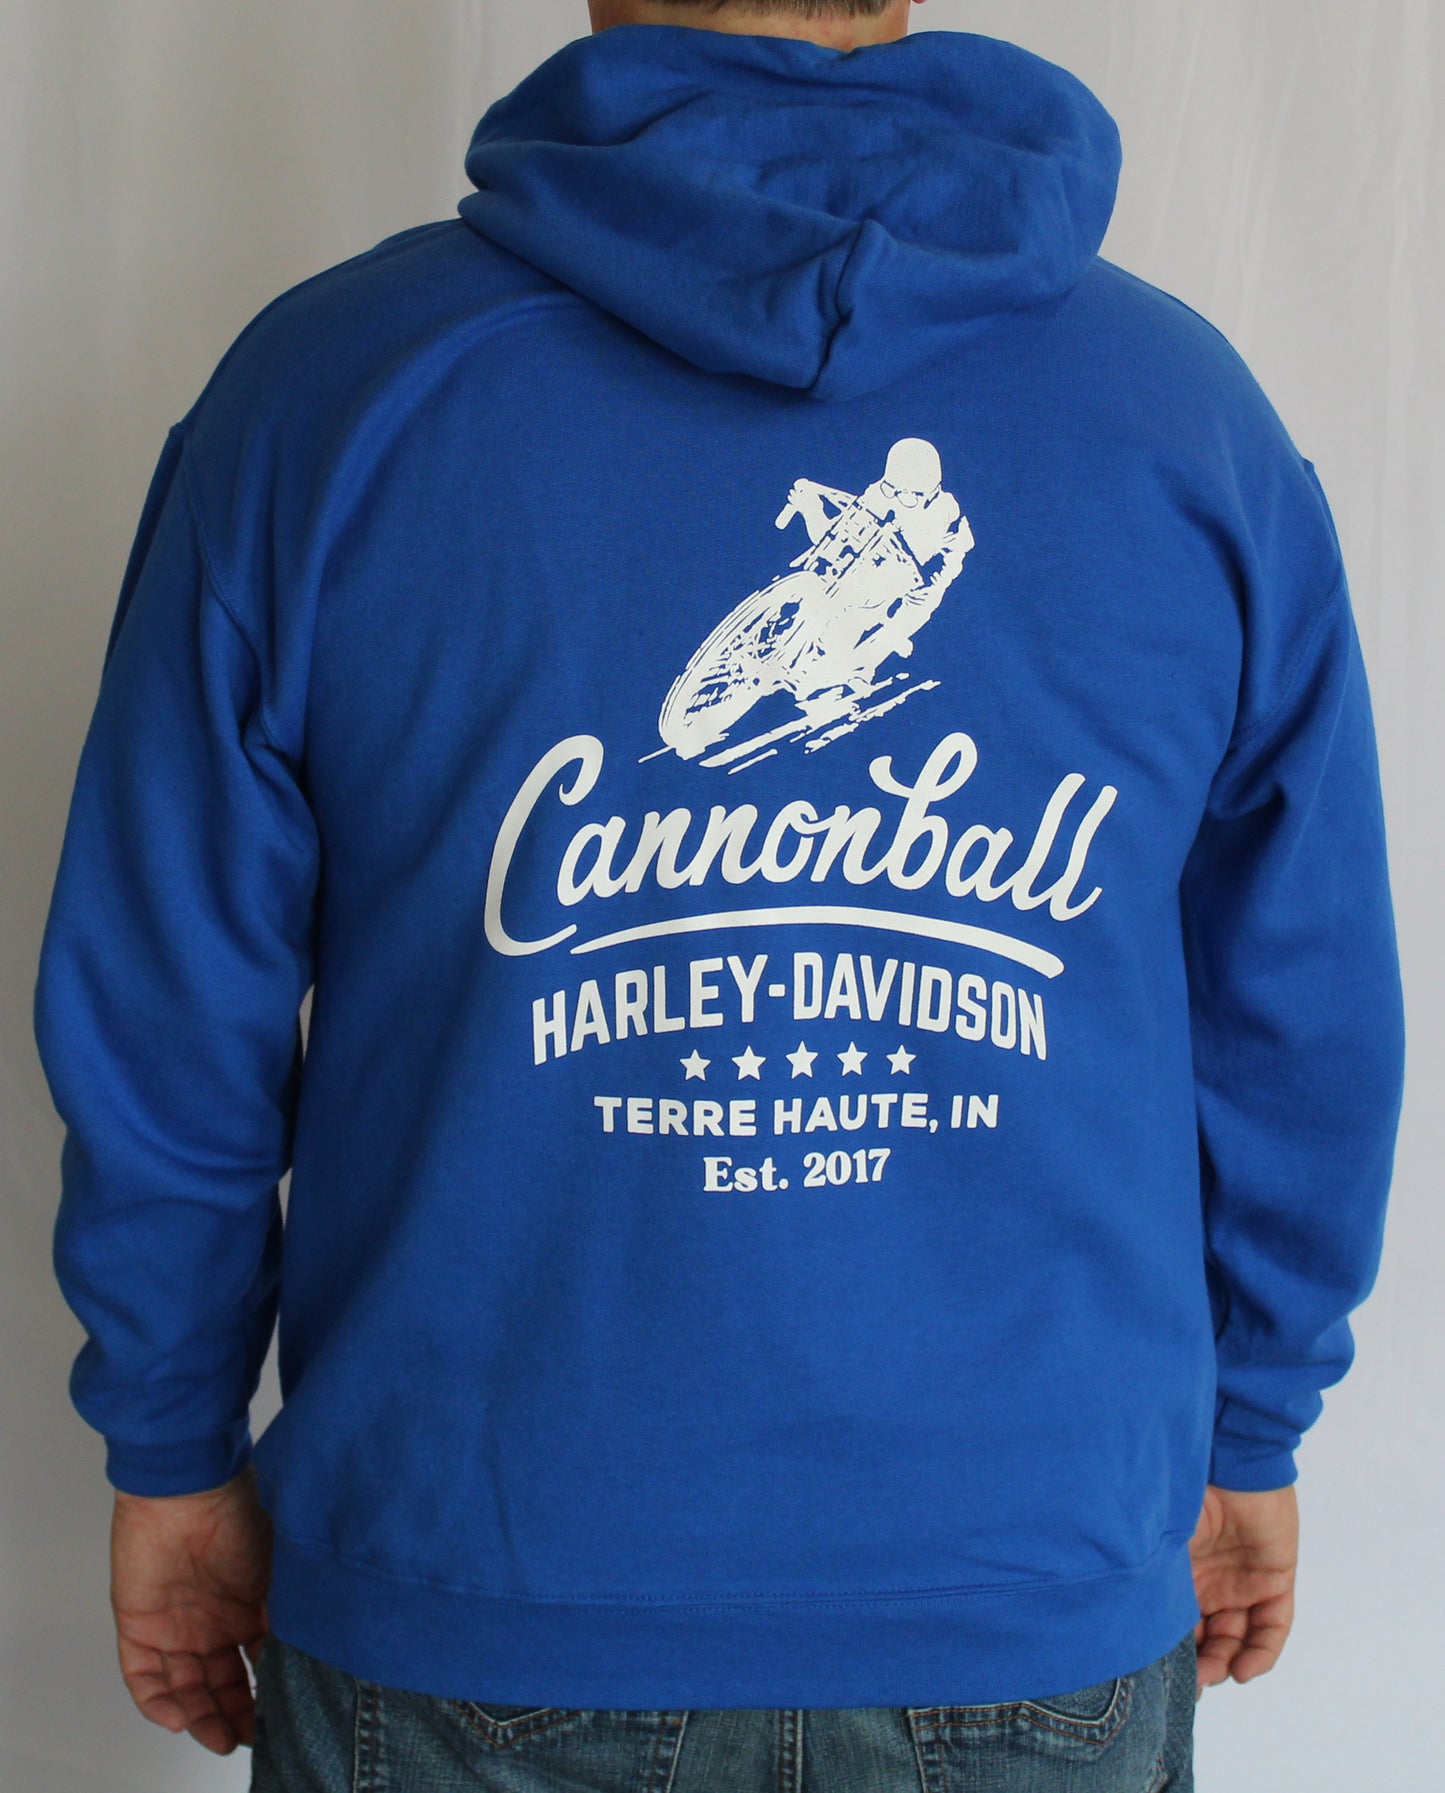 Cannonball Harley-Davidson Royal Blue Mens Sweatshirt